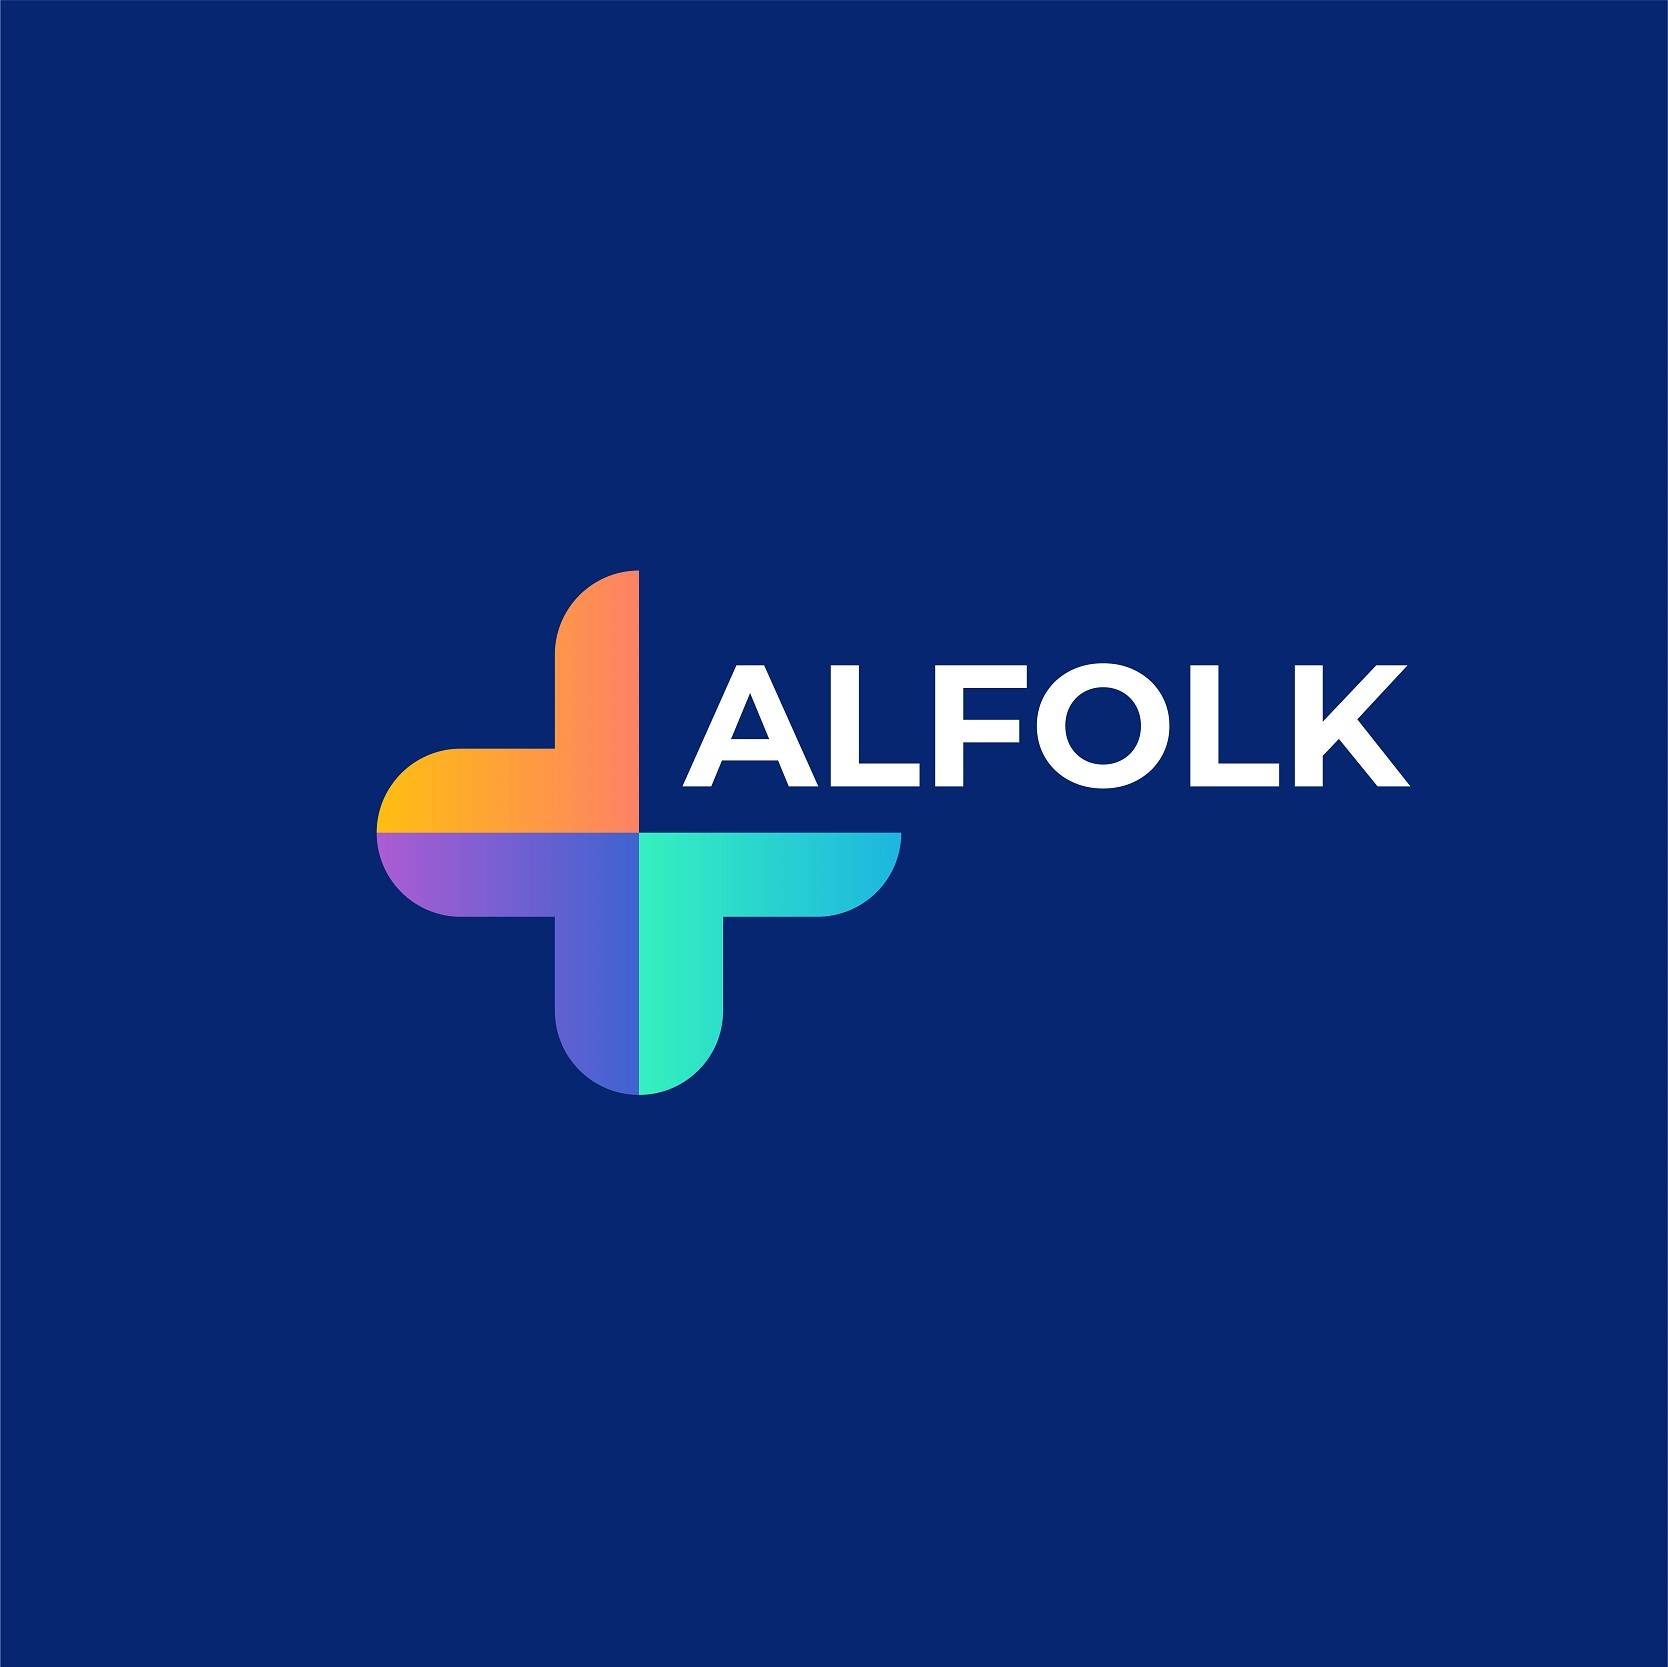 Alfolk company logo design